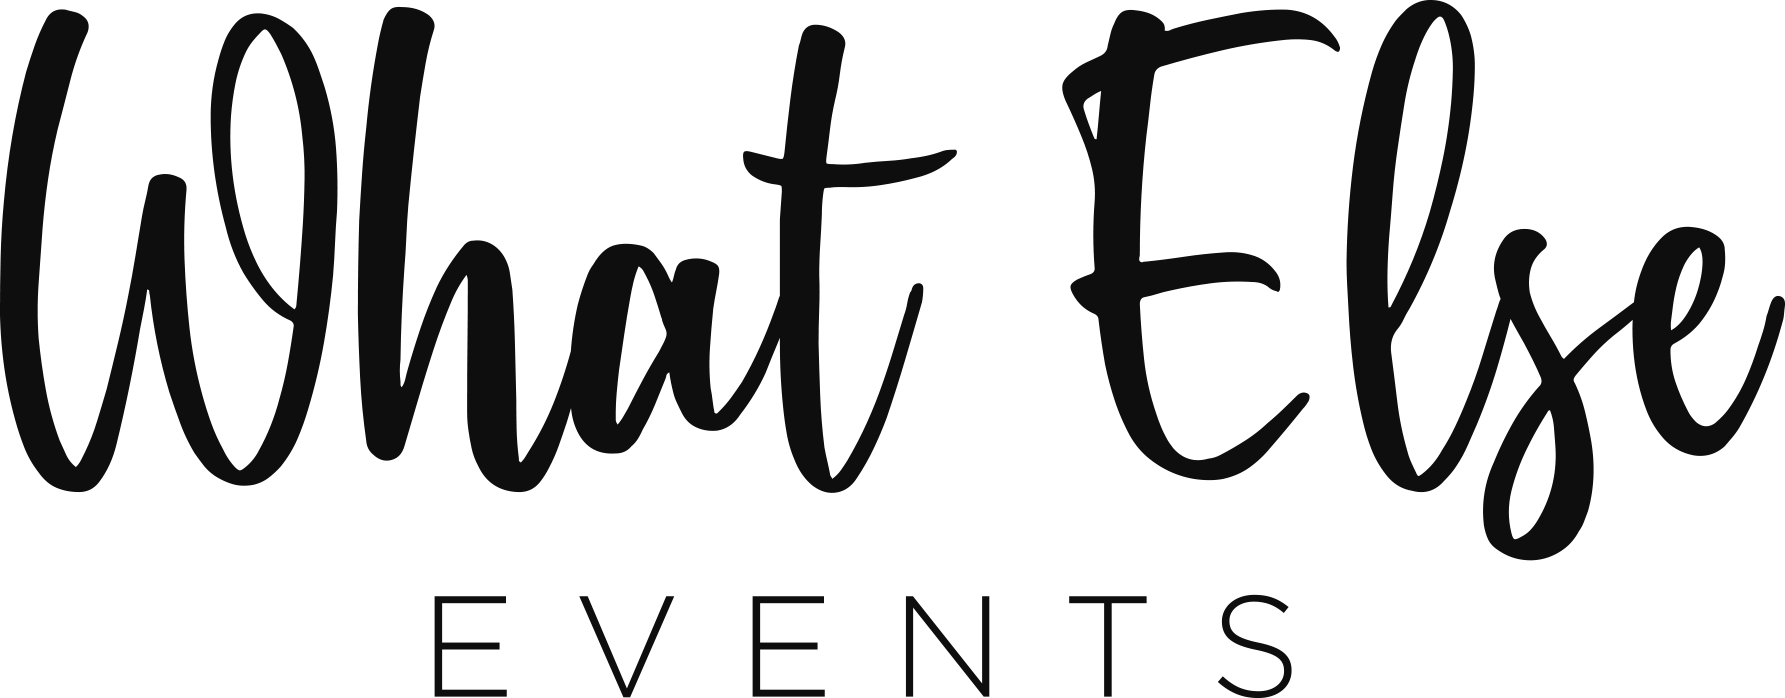 What Else Events Ltd